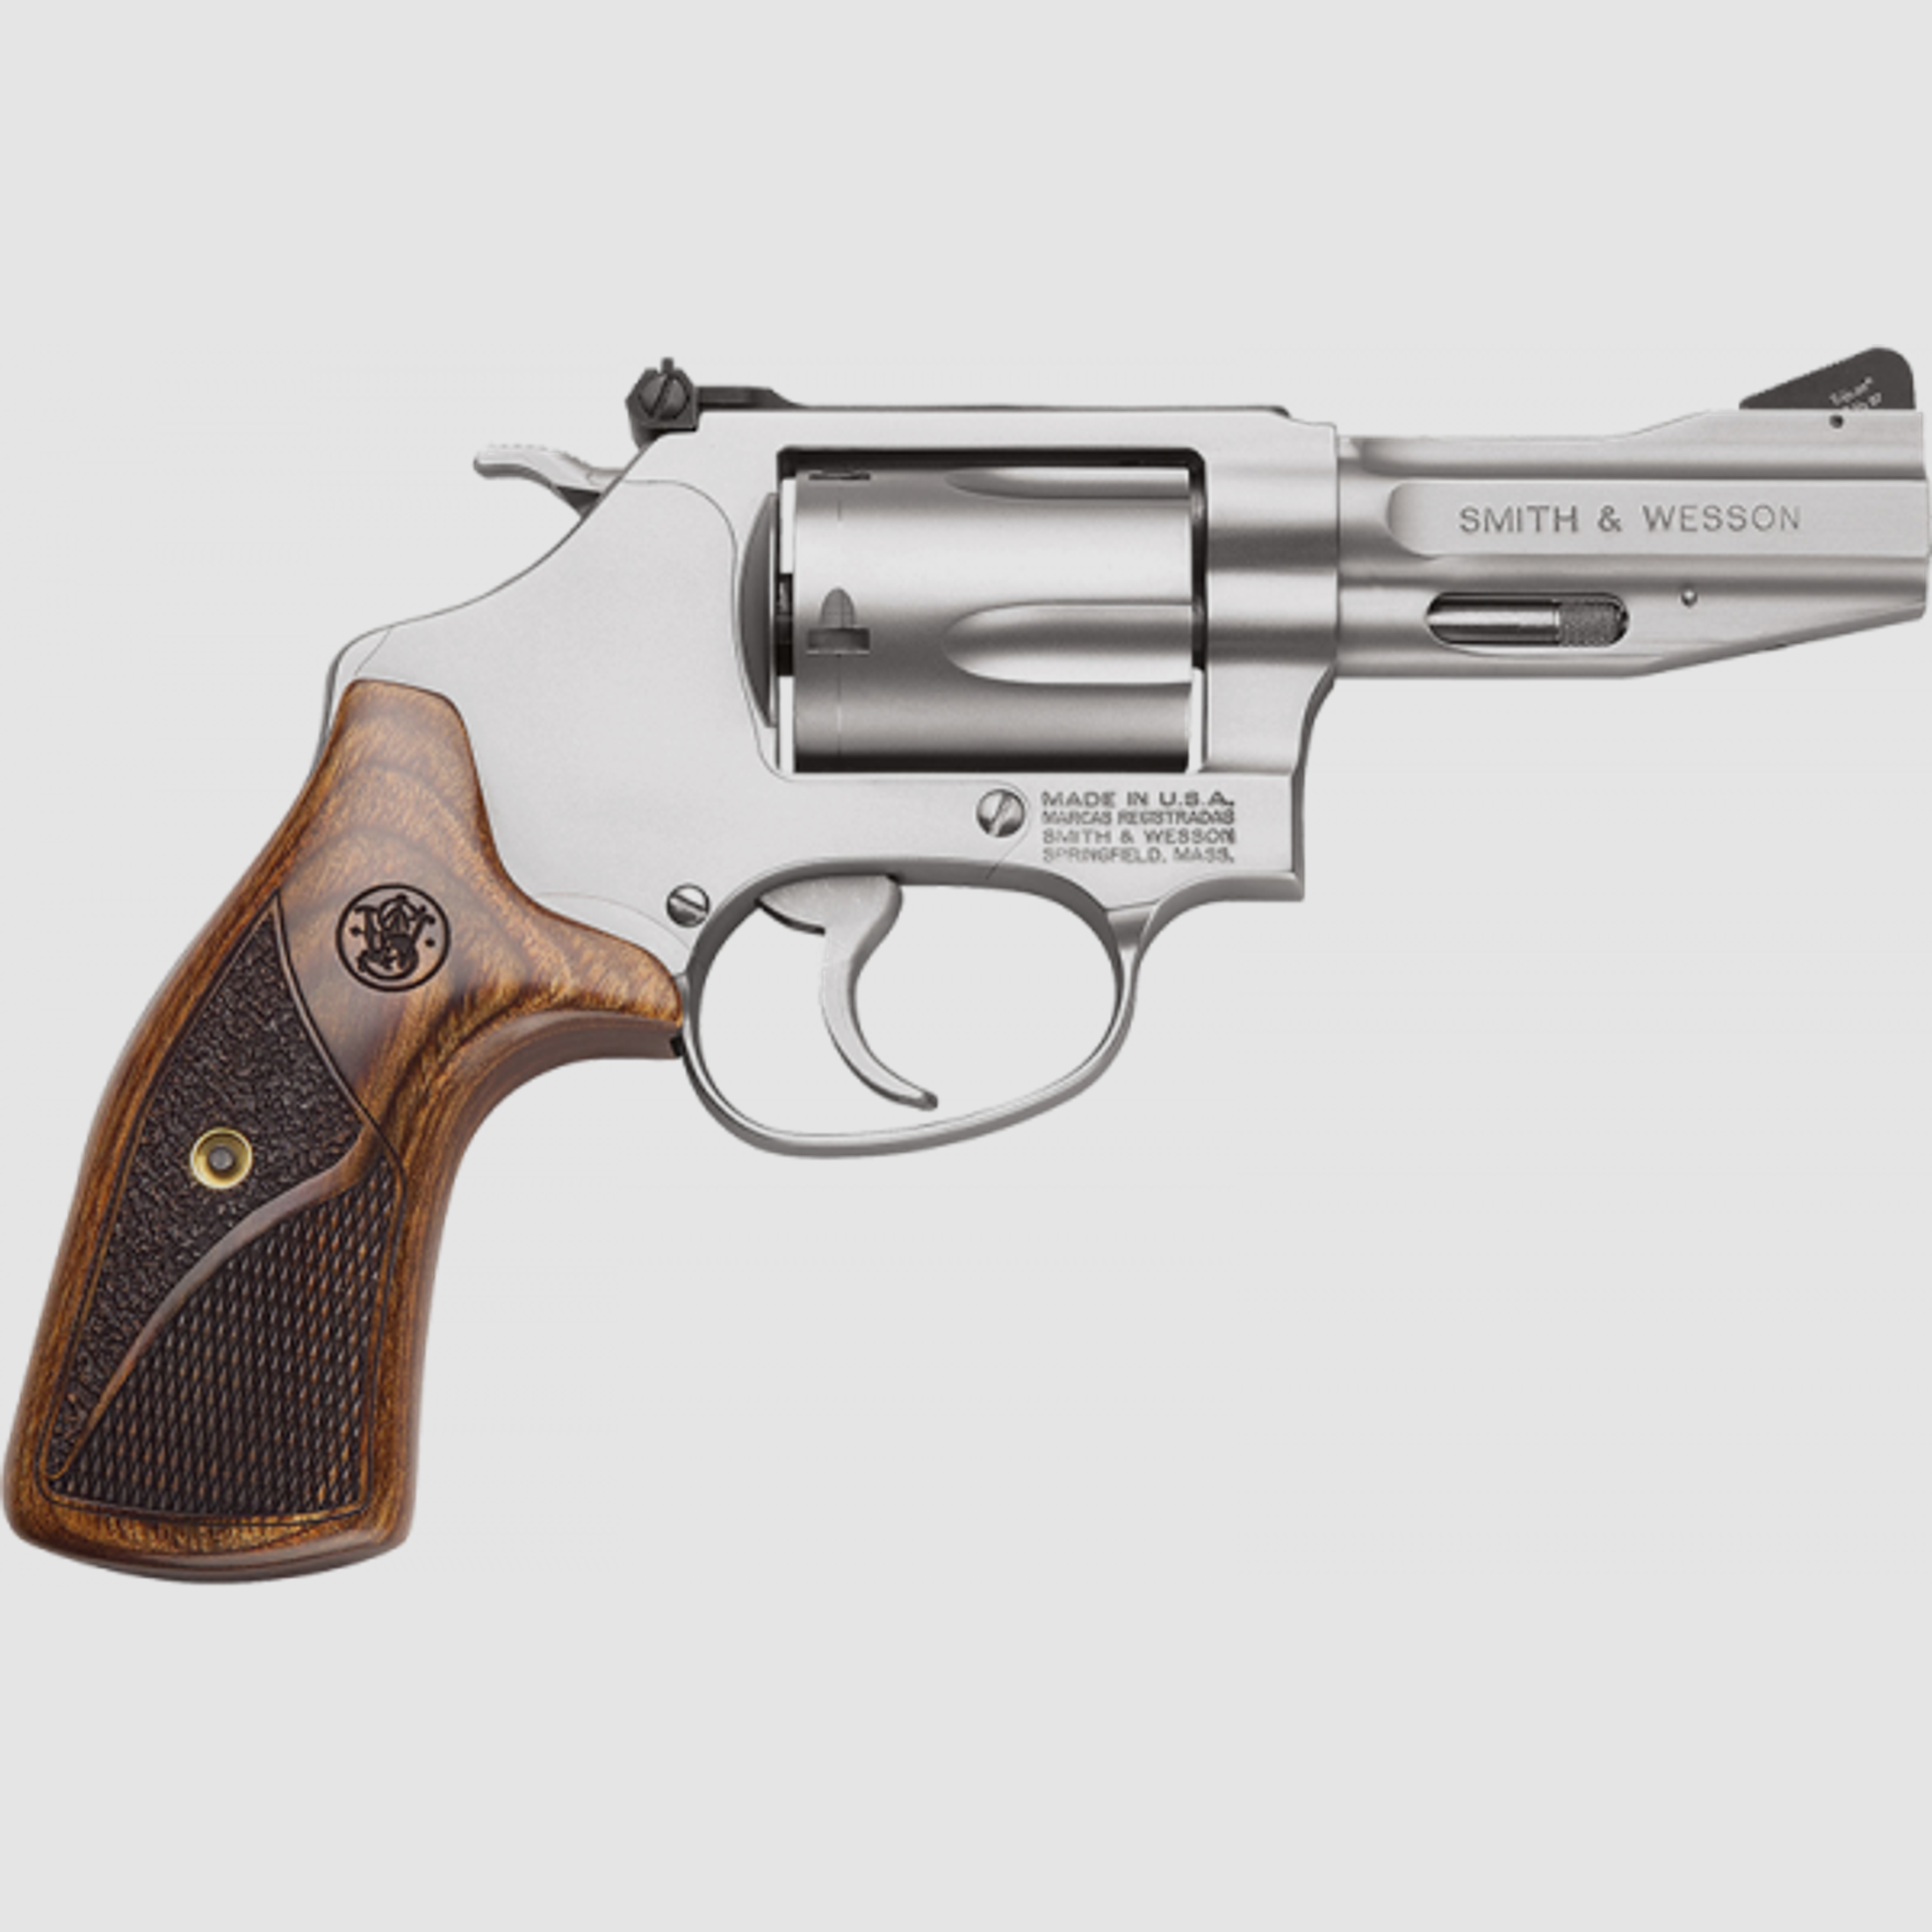 Smith & Wesson Model 60 Performance Center Pro Series Revolver